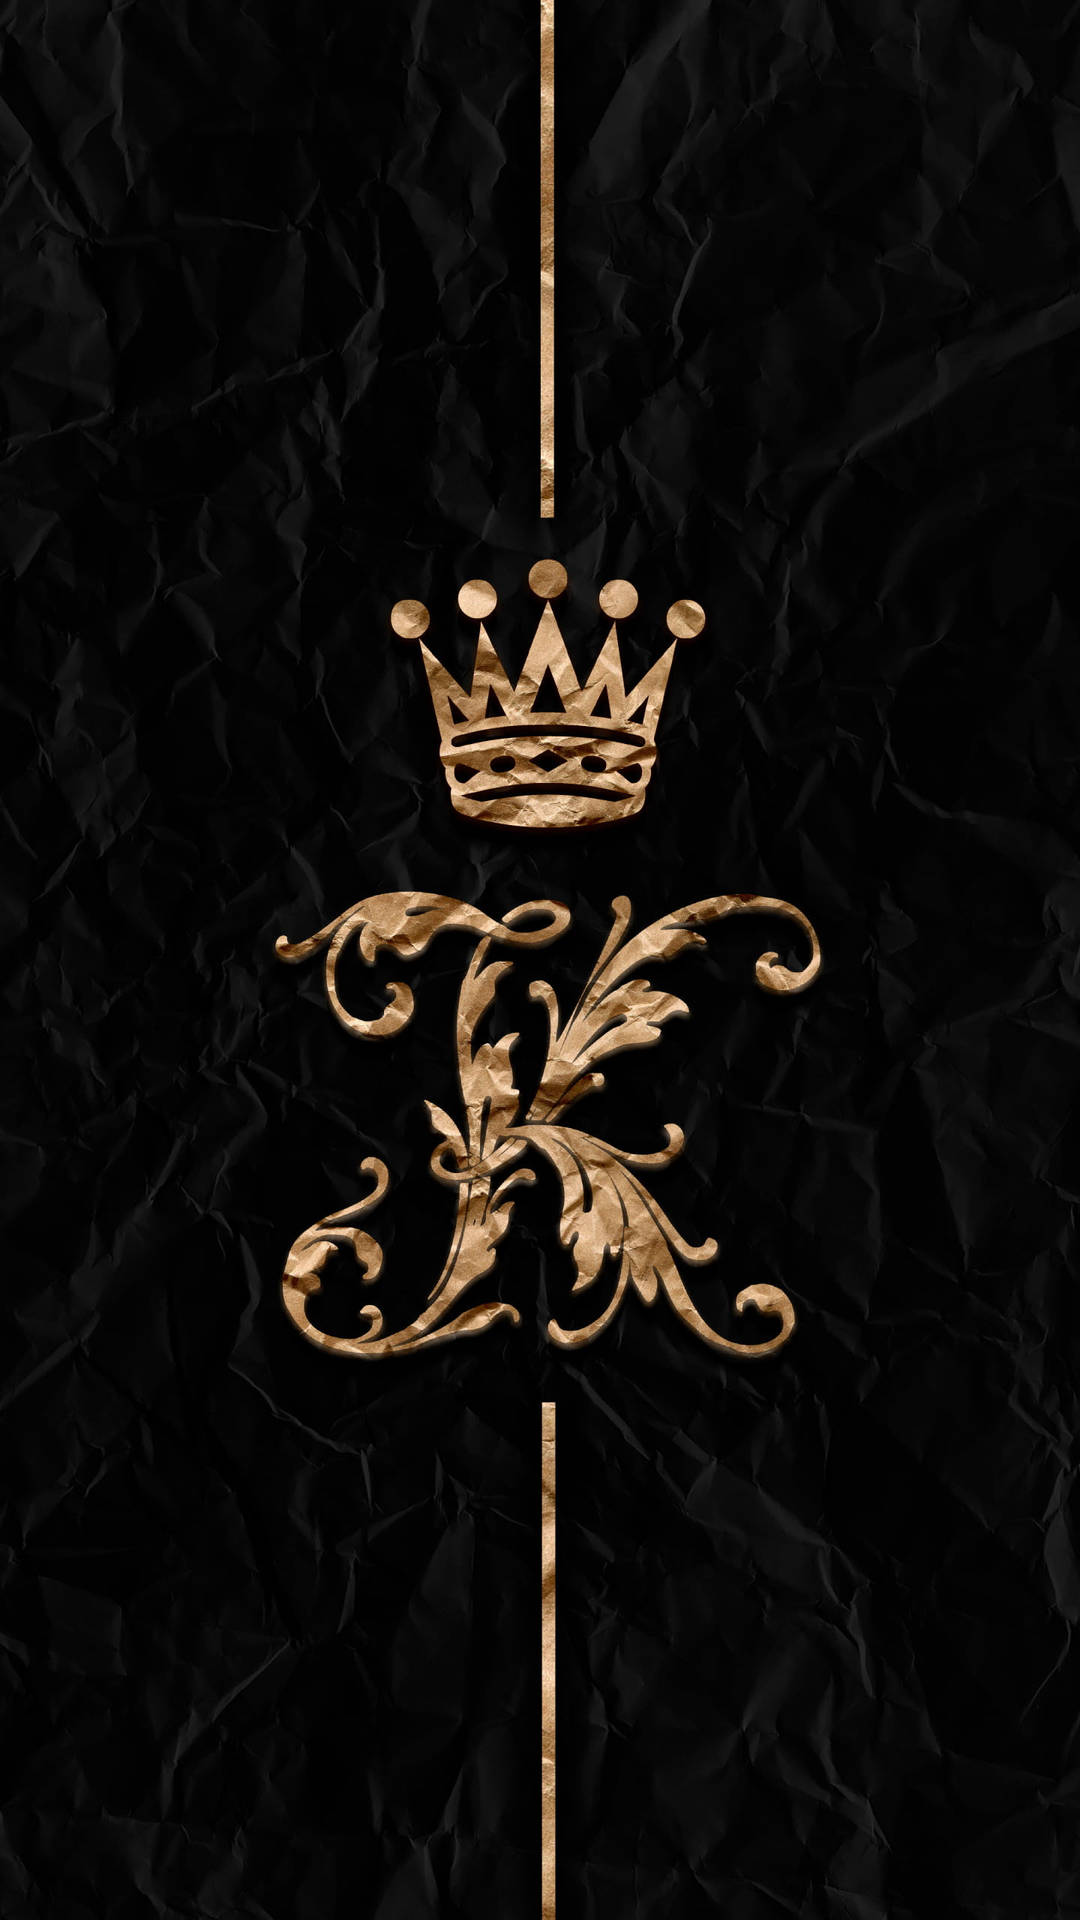 Free Black King Wallpaper Downloads, [100+] Black King Wallpapers for FREE  